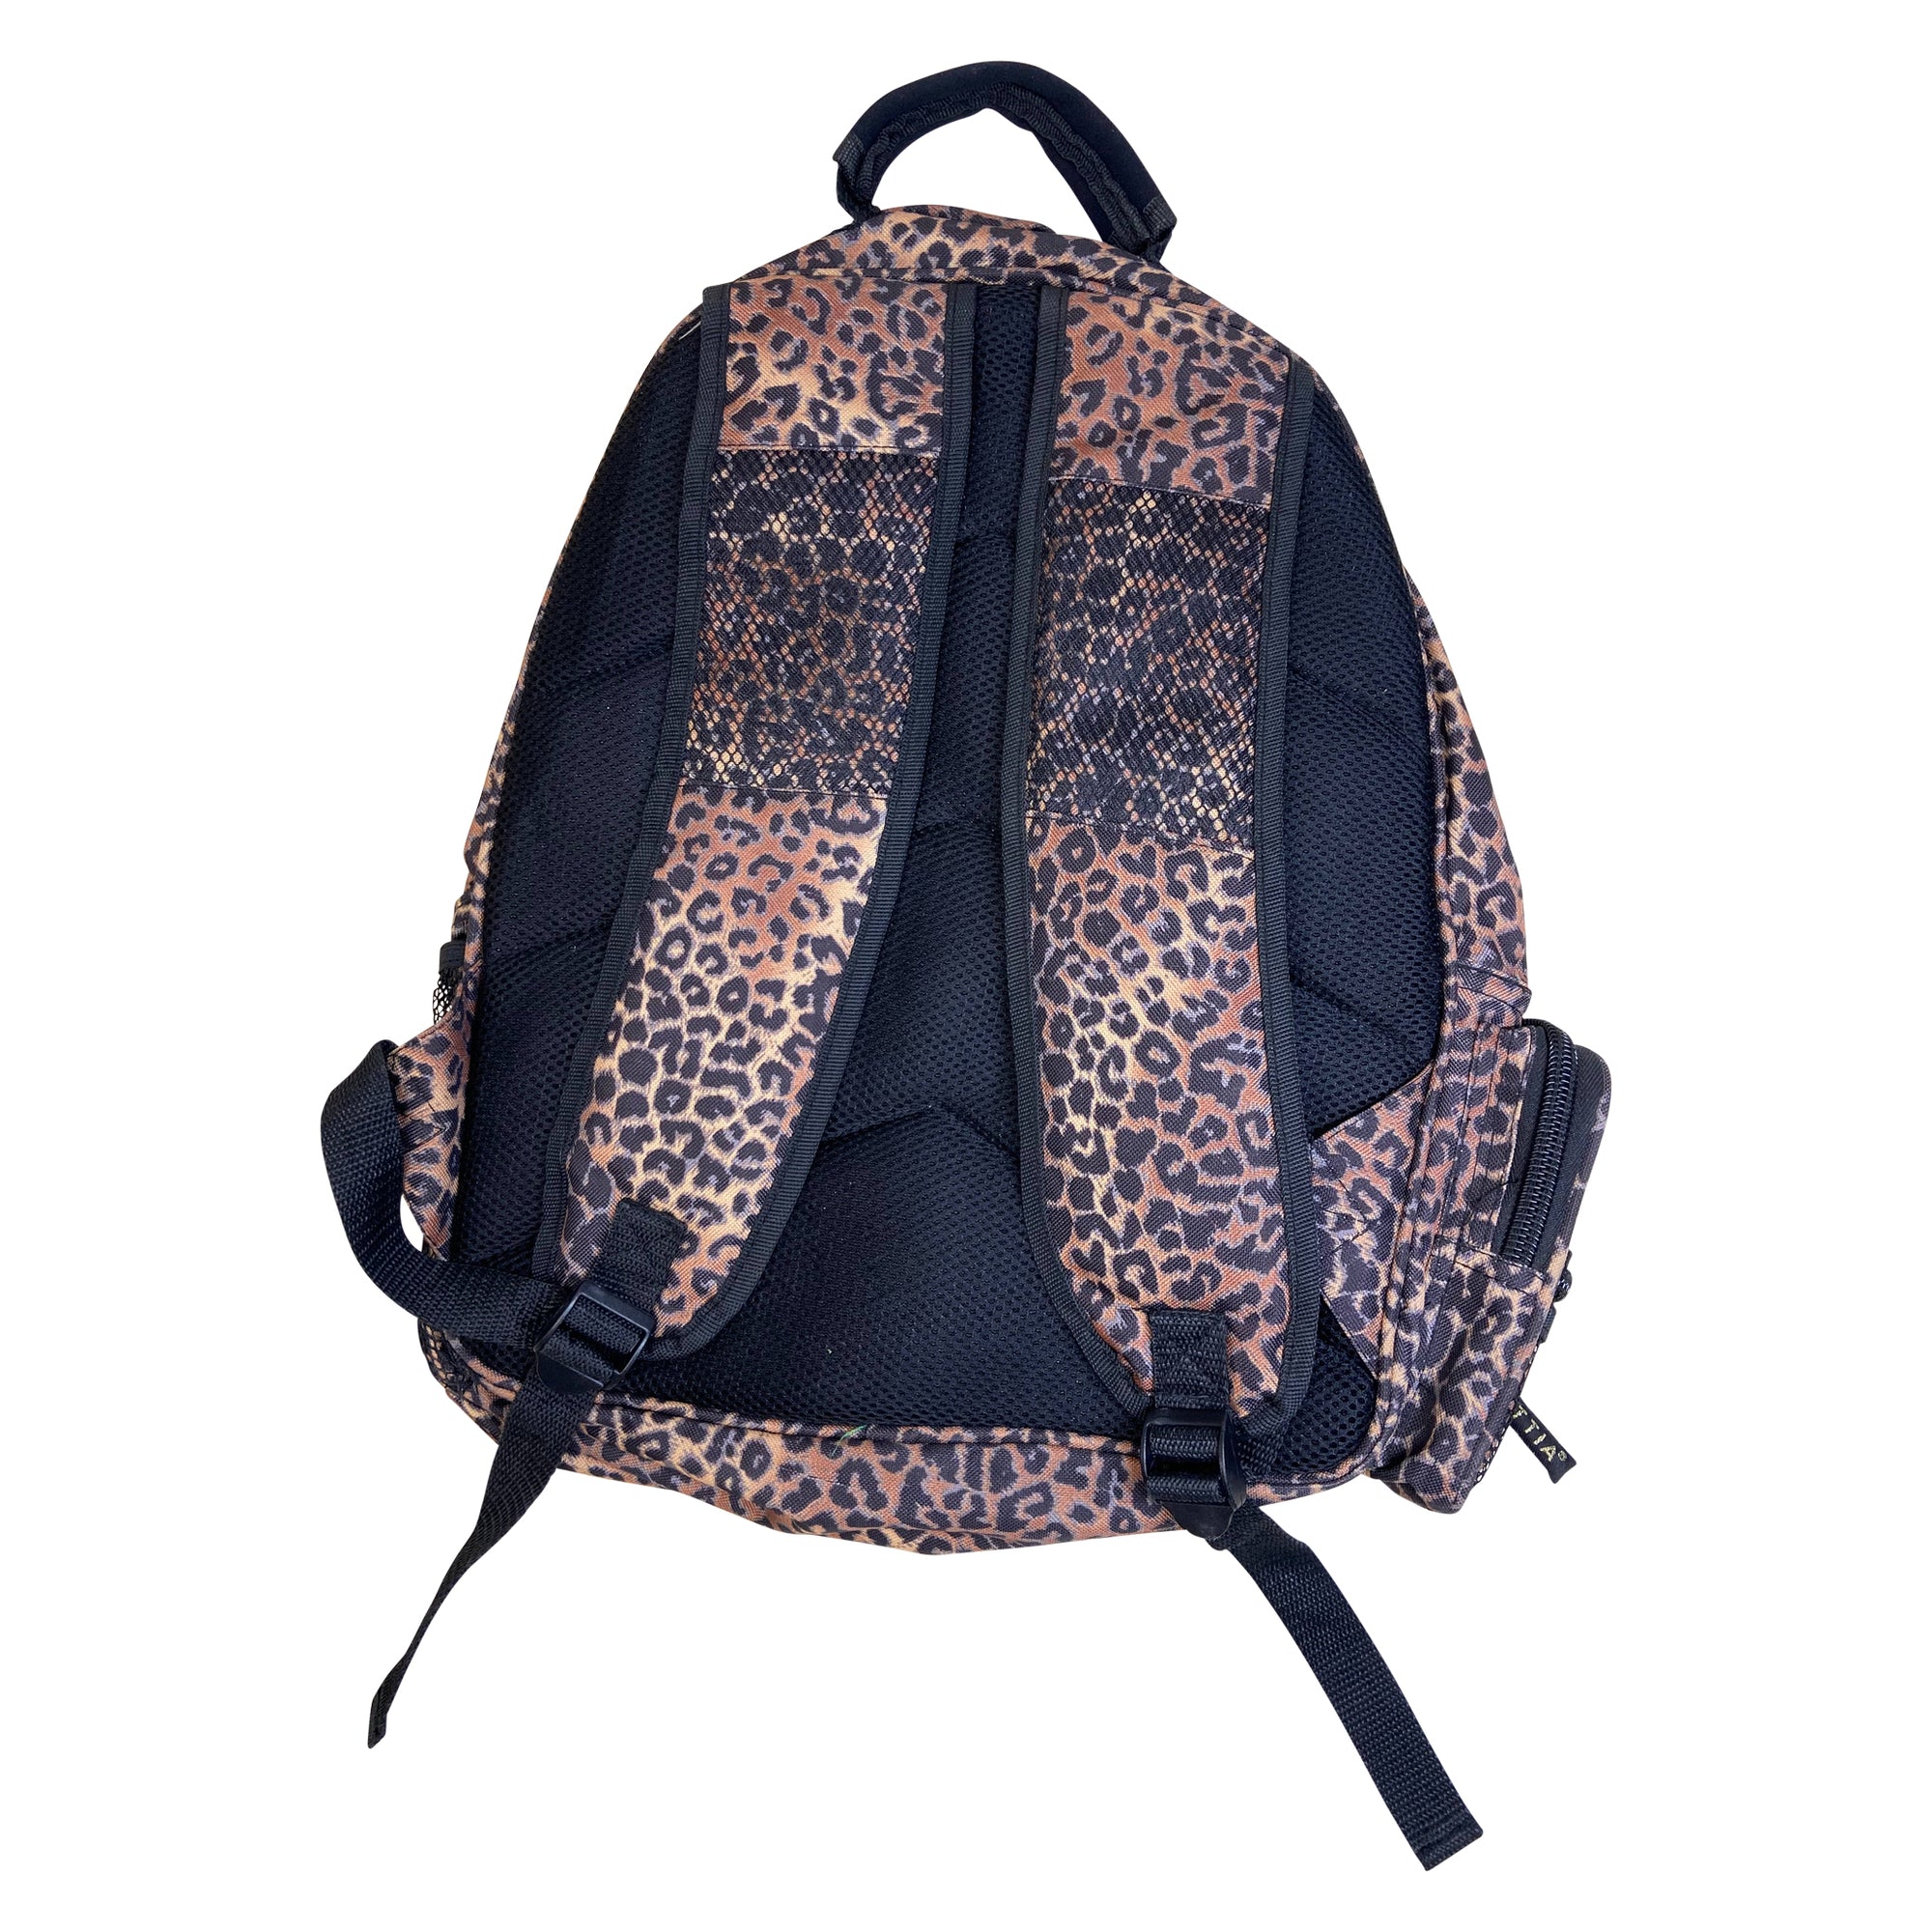 Lettia Backpack in Leopard